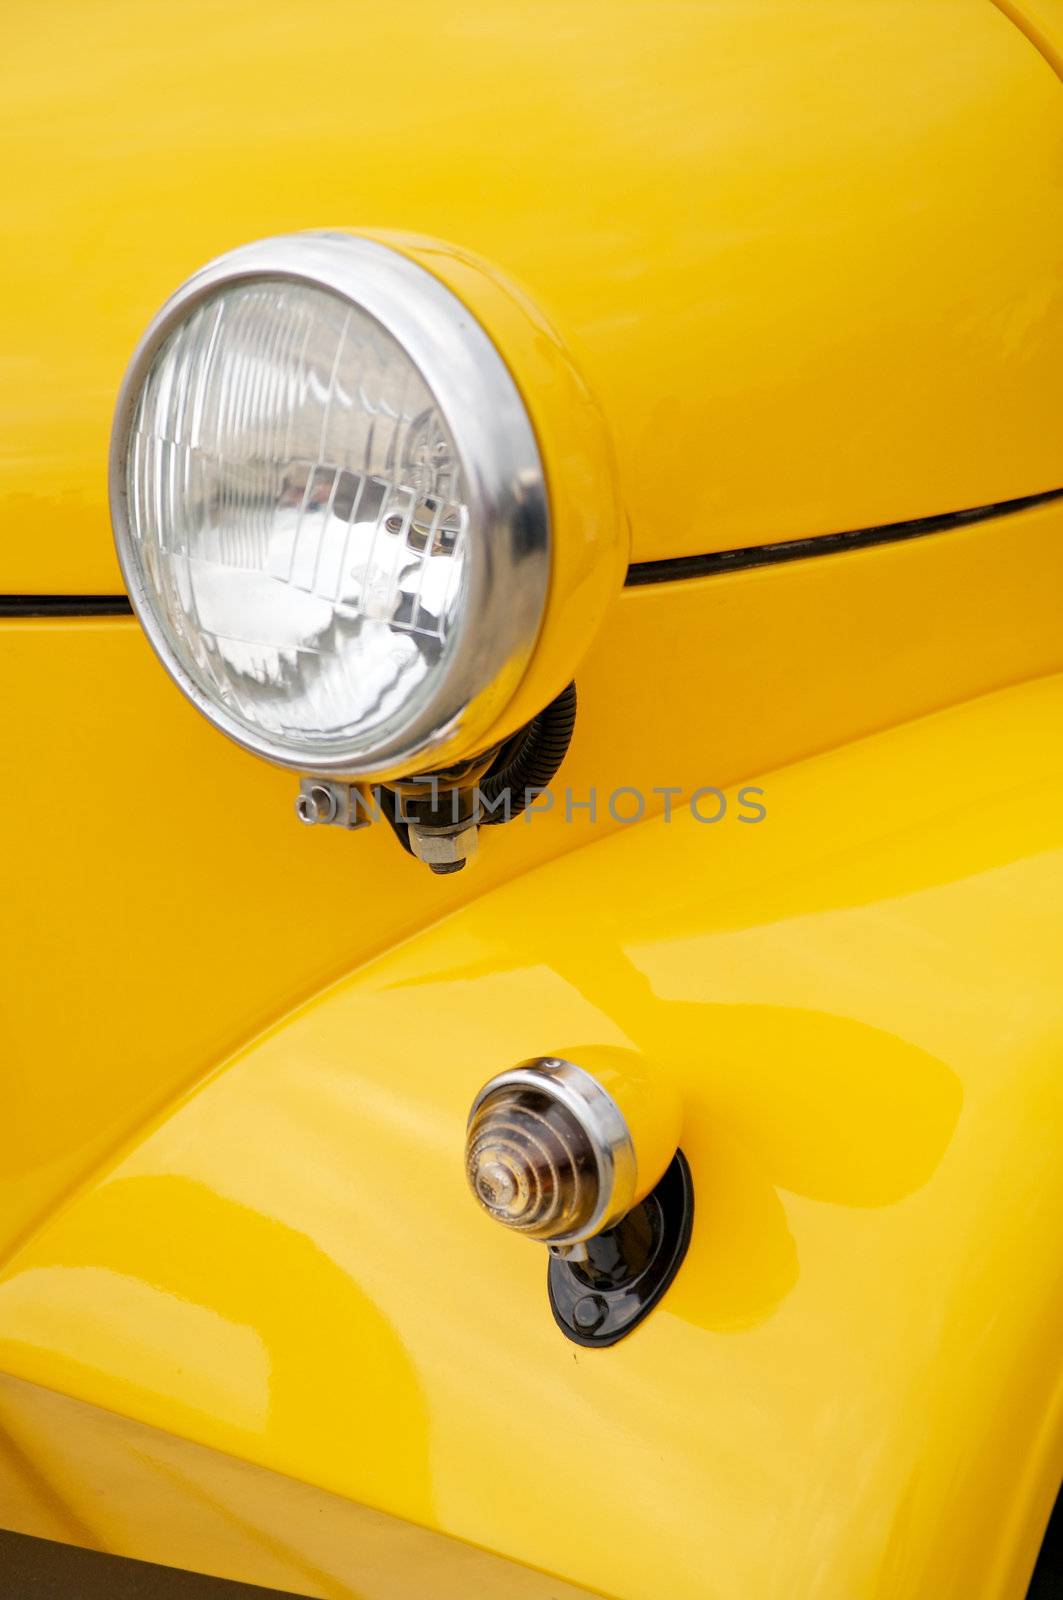 Headlight and small headlamp on yellow close up